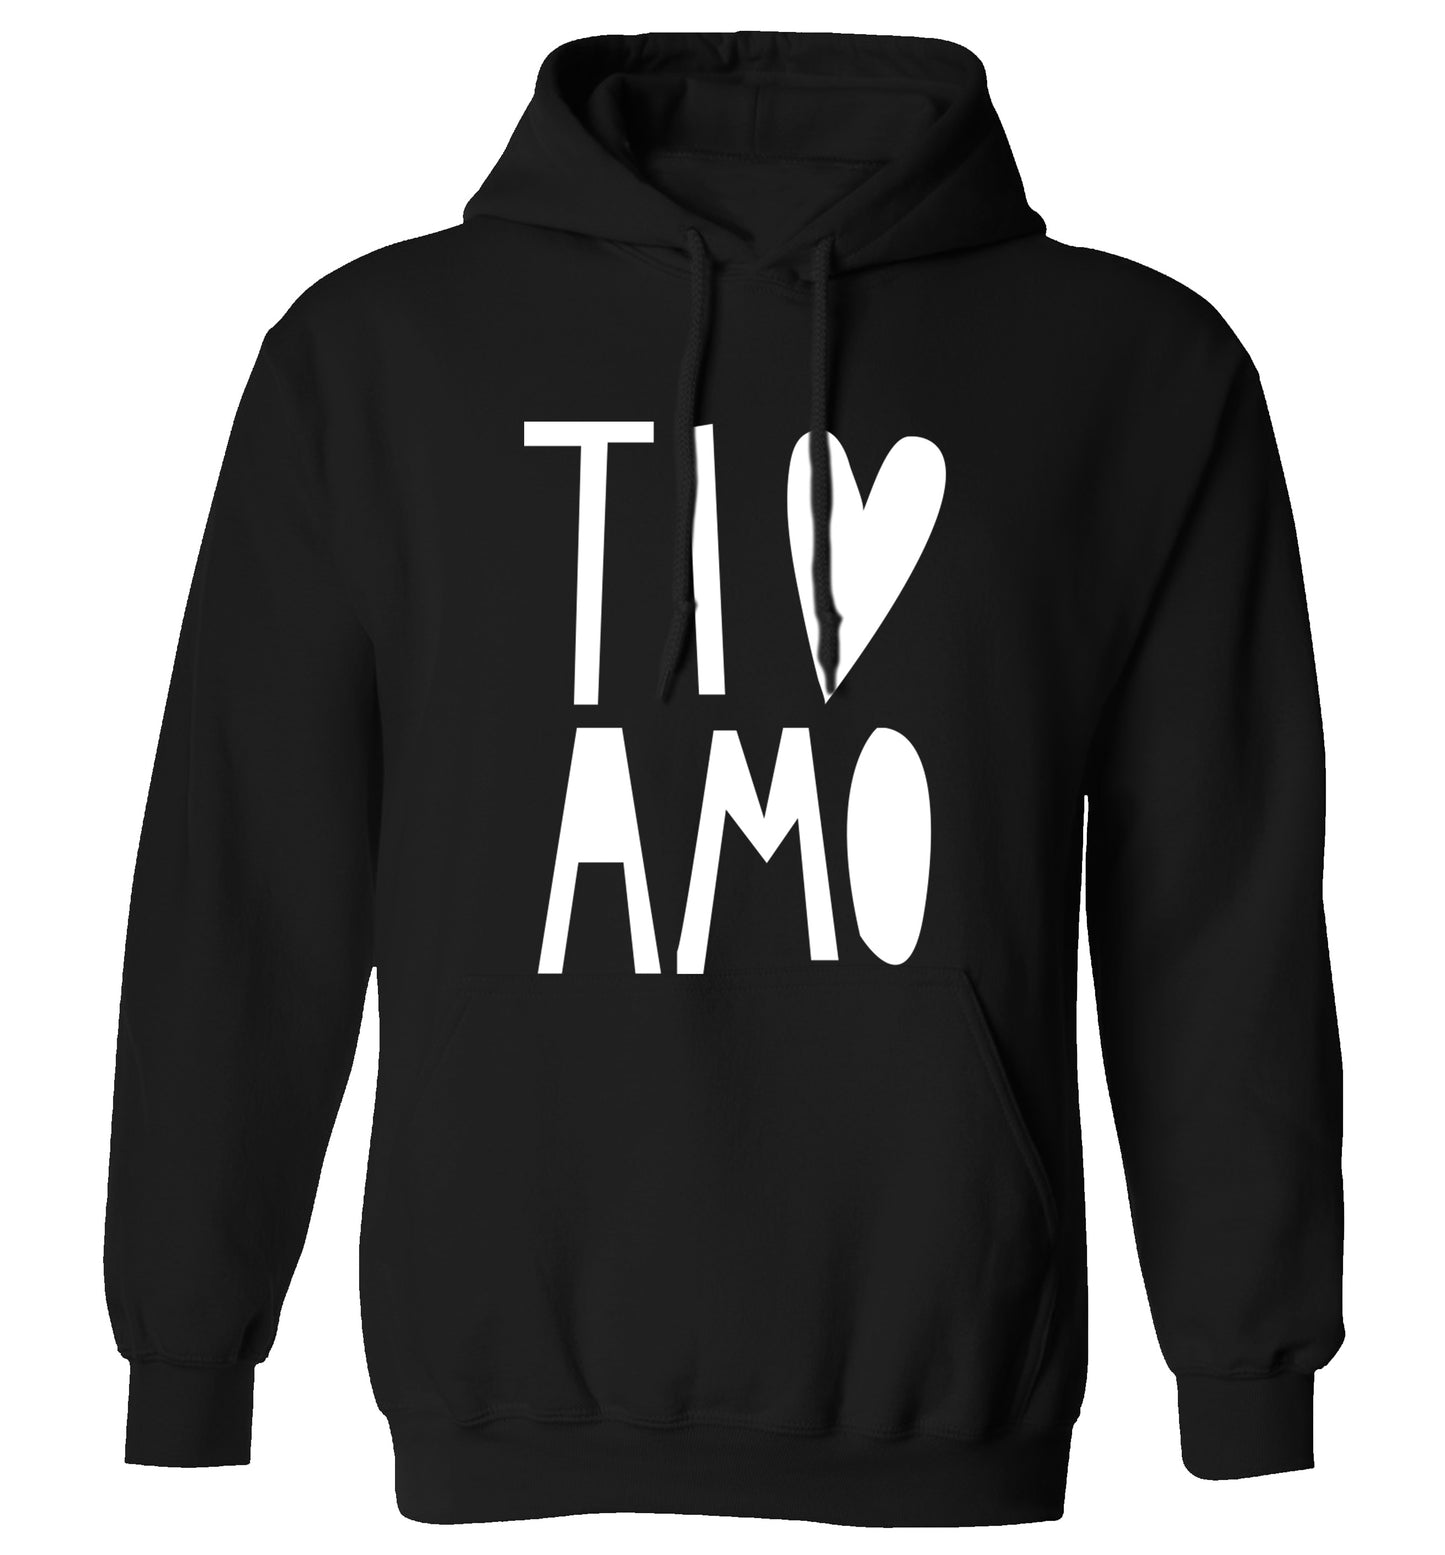 Ti amo - I love you adults unisex black hoodie 2XL